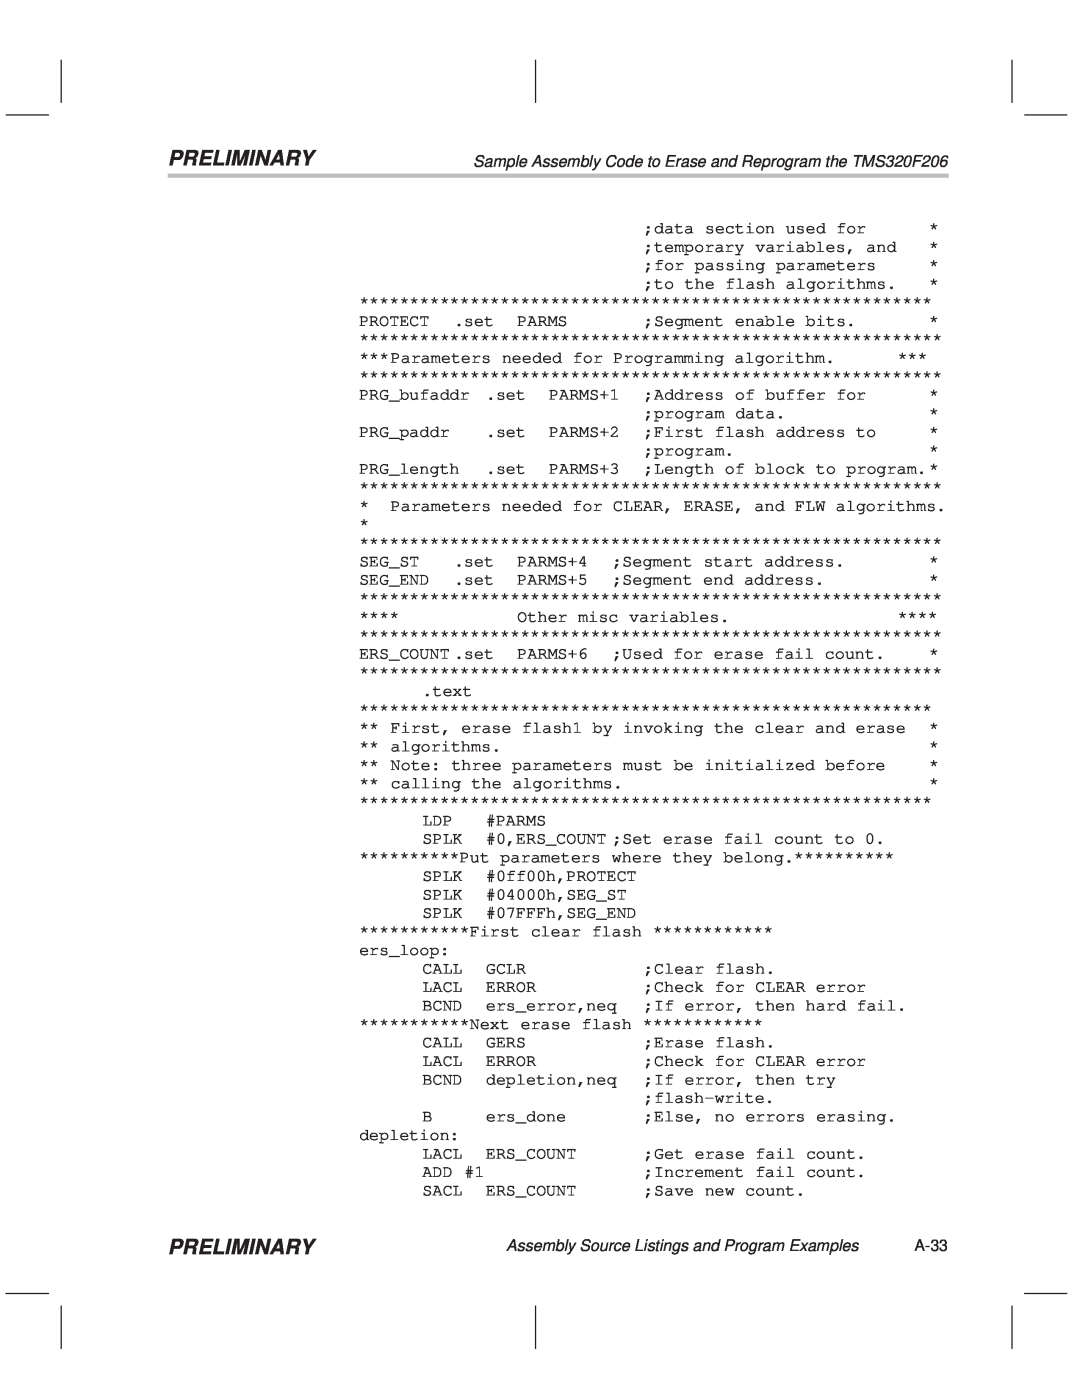 Texas Instruments TMS320F20x/F24x DSP manual Preliminary 